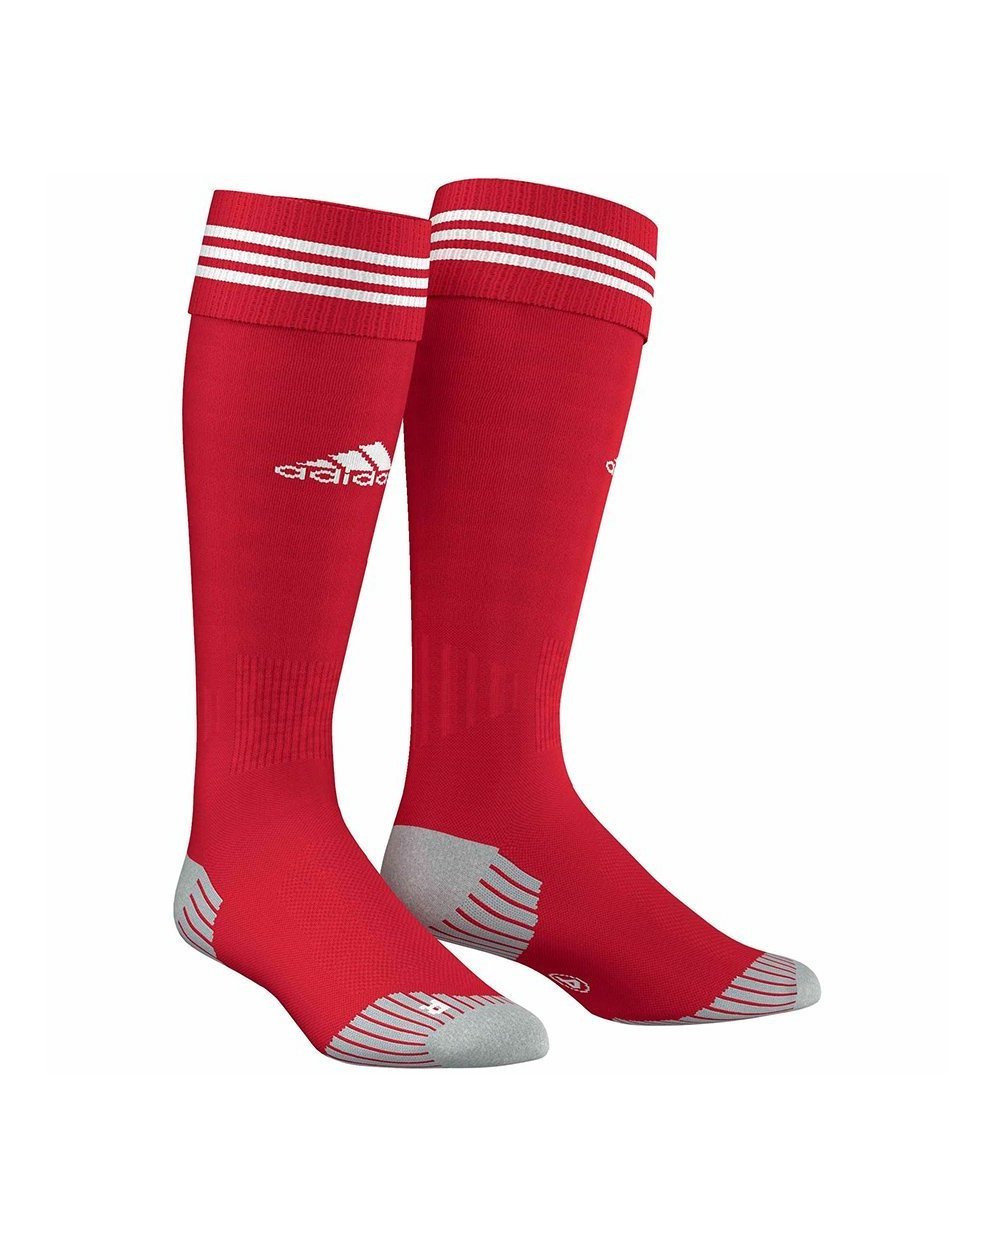 Calcetines Adidas Adisock 18 Rojo – Flick Hockey